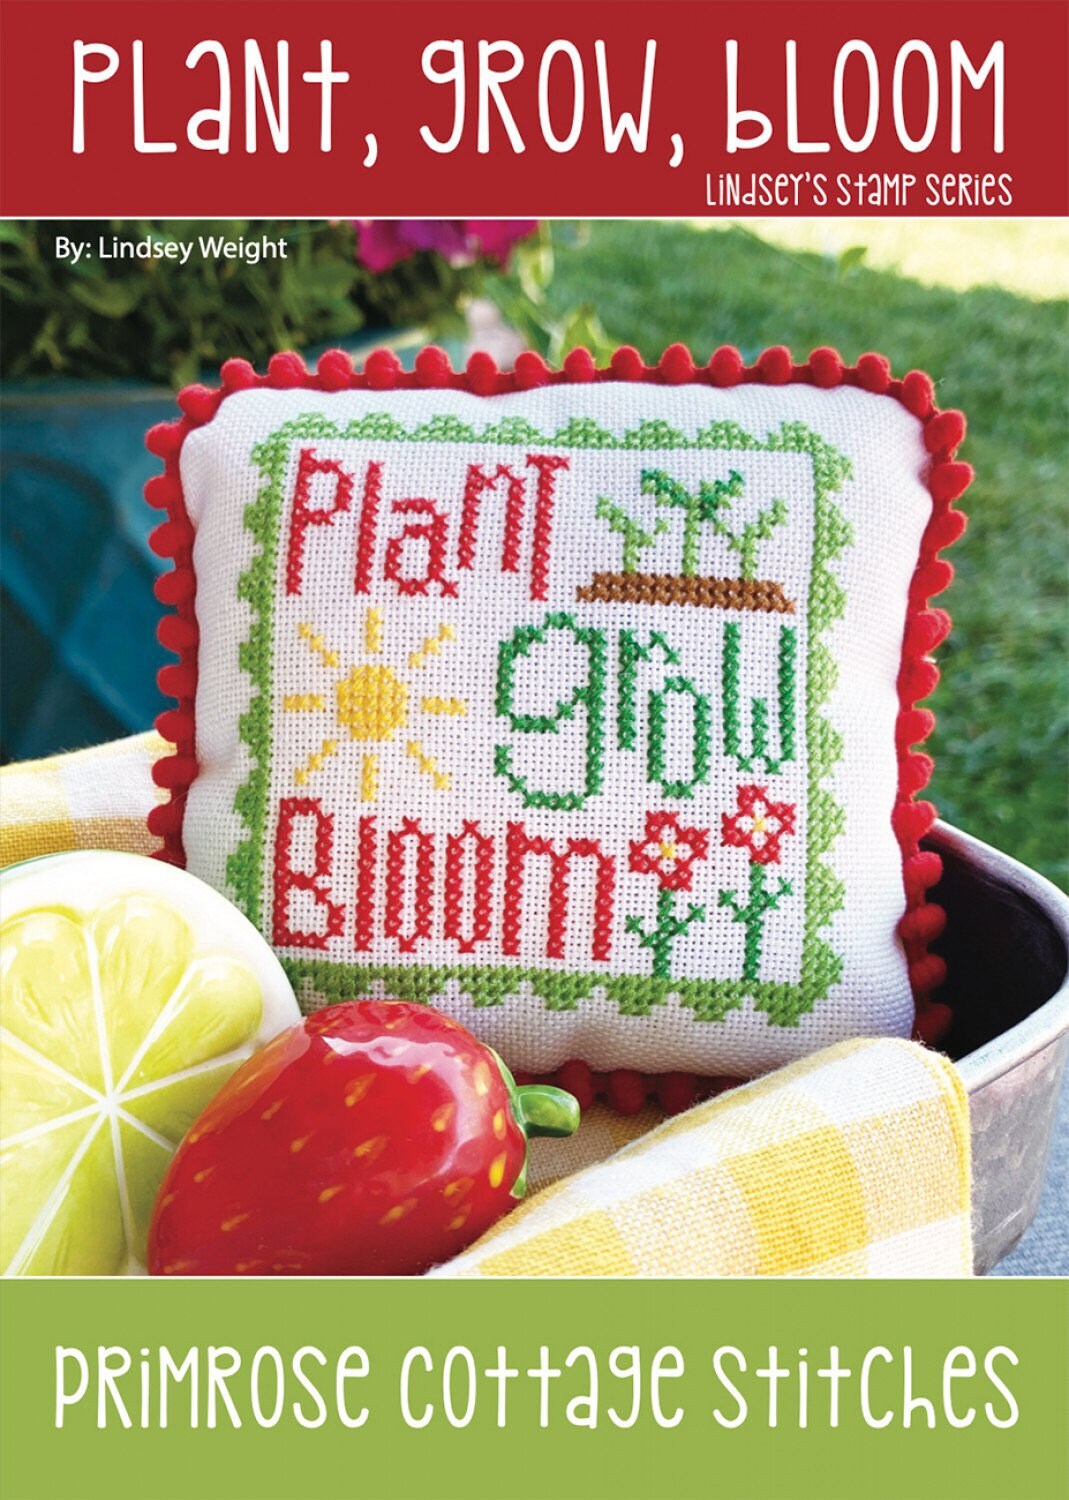 Plant Grow Bloom Cross Stitch Pattern - Primrose Cottage Stitches - 43 x 43 stitches - Stamp Series